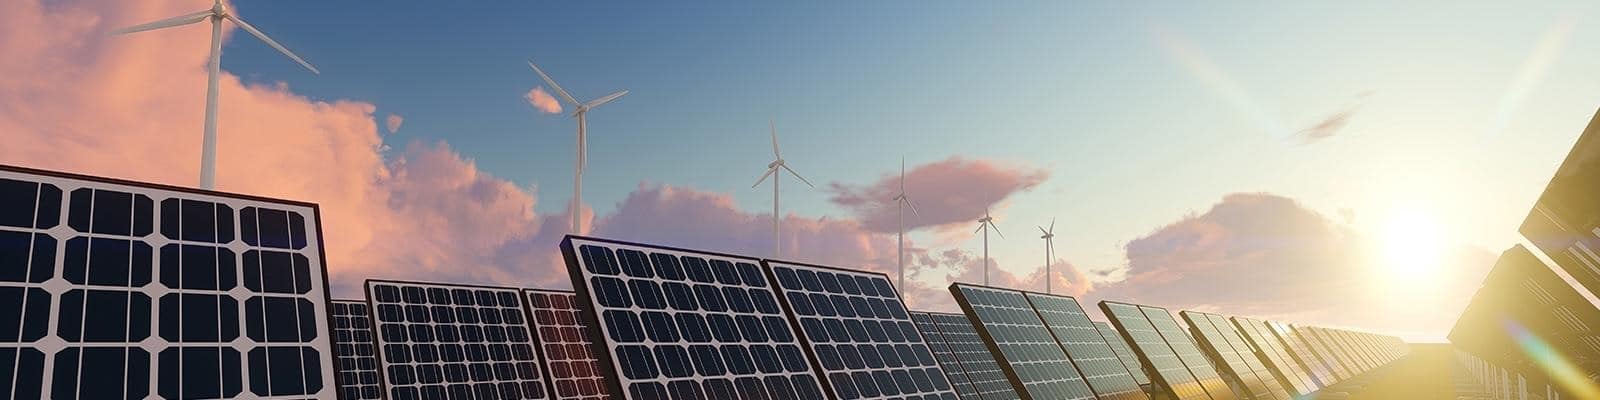  energy renewable future bright offers investors seem 